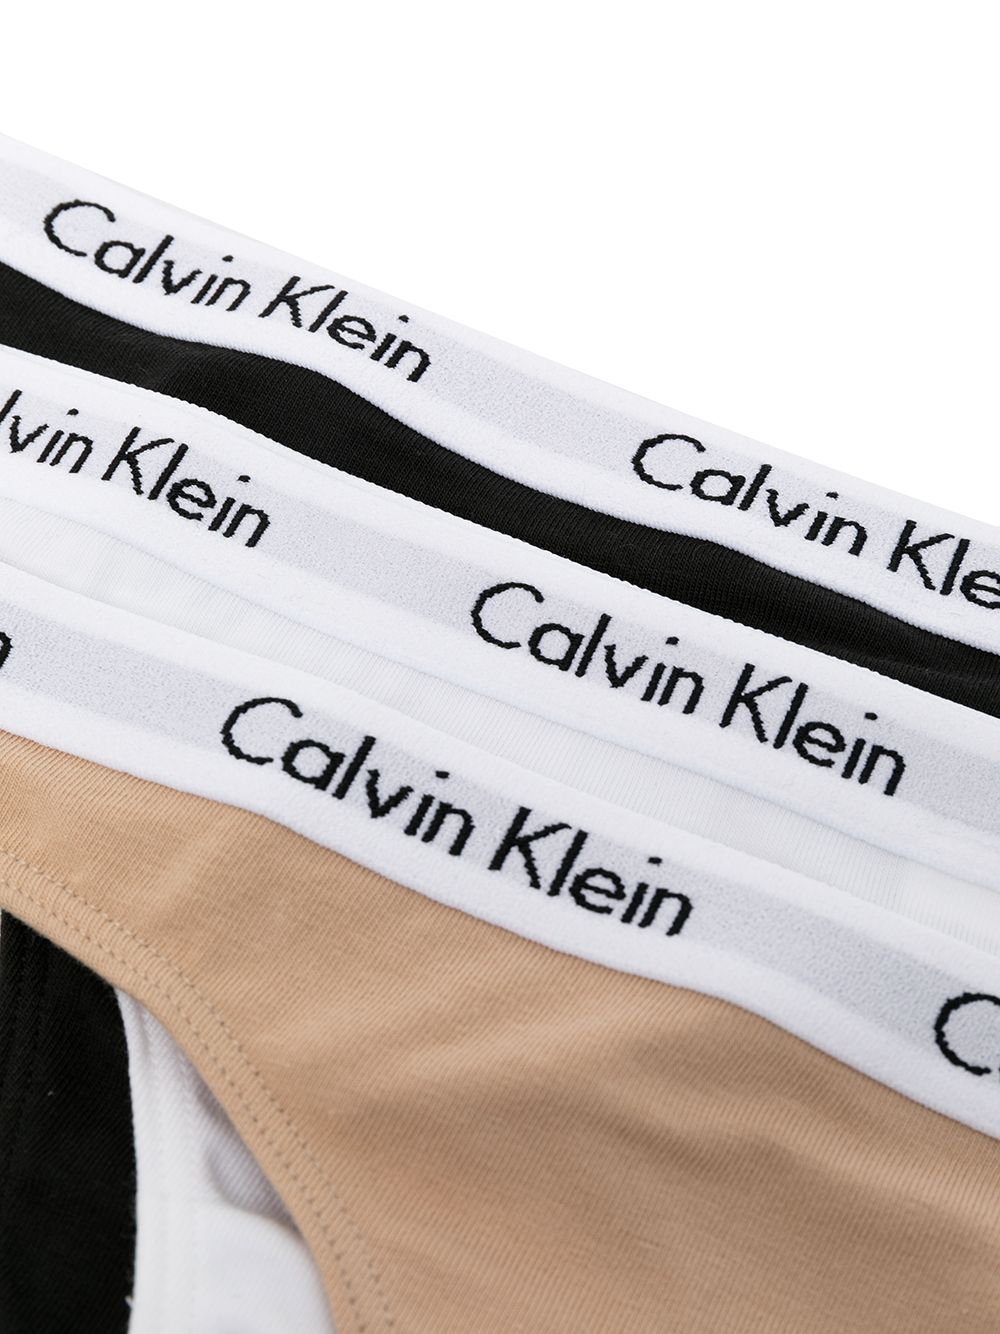 фото Calvin klein underwear трусы-стринги с вышитым логотипом